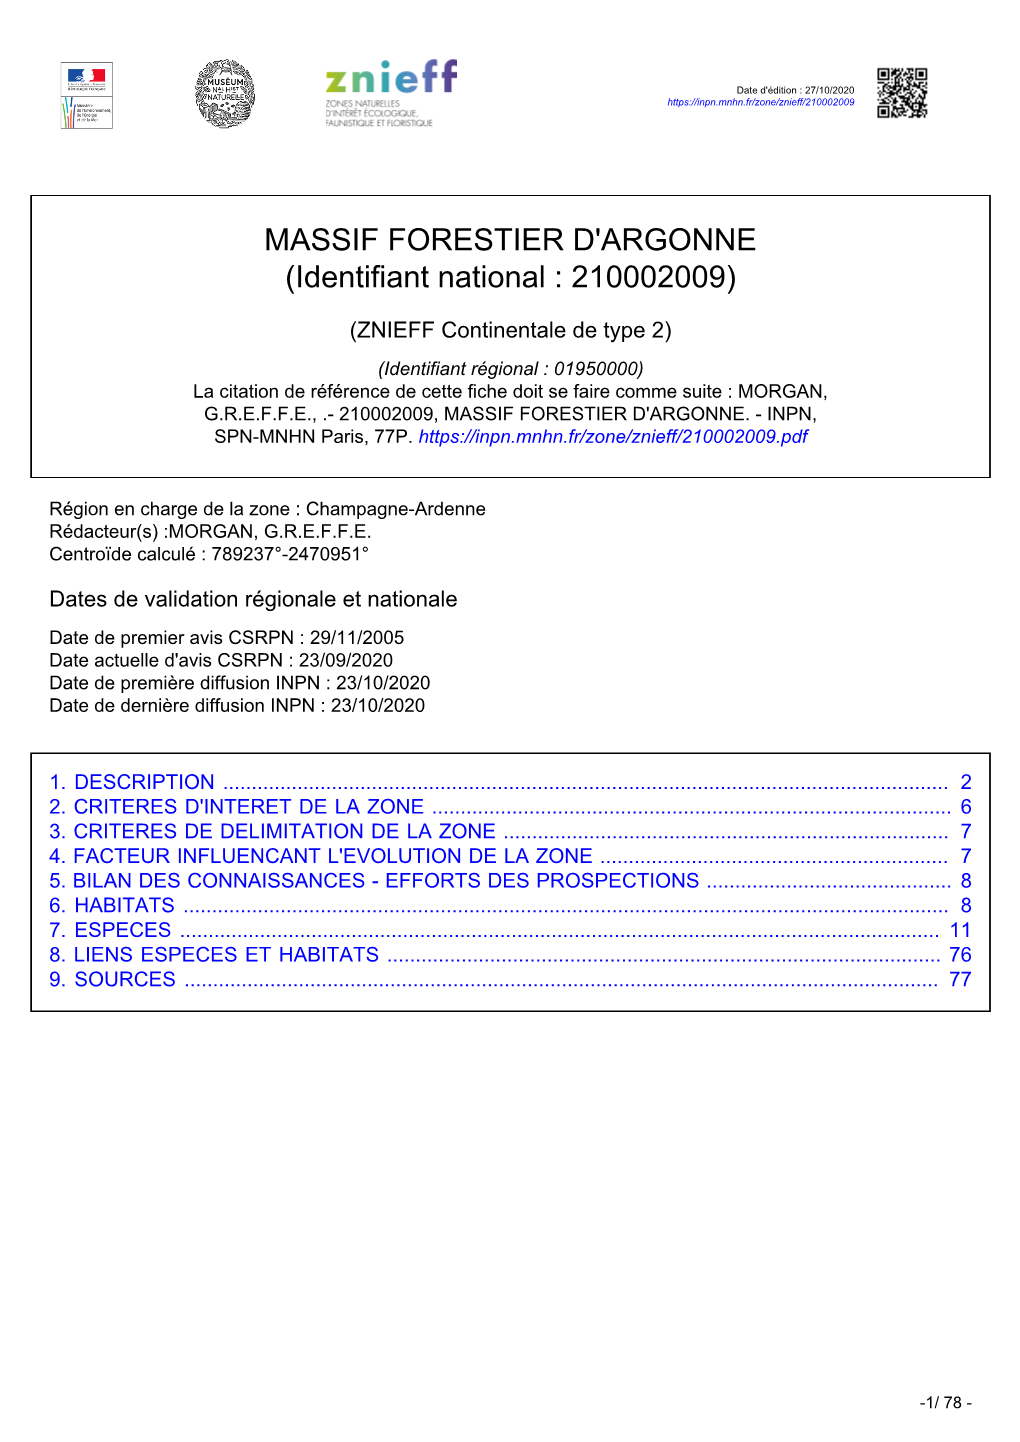 MASSIF FORESTIER D'argonne (Identifiant National : 210002009)